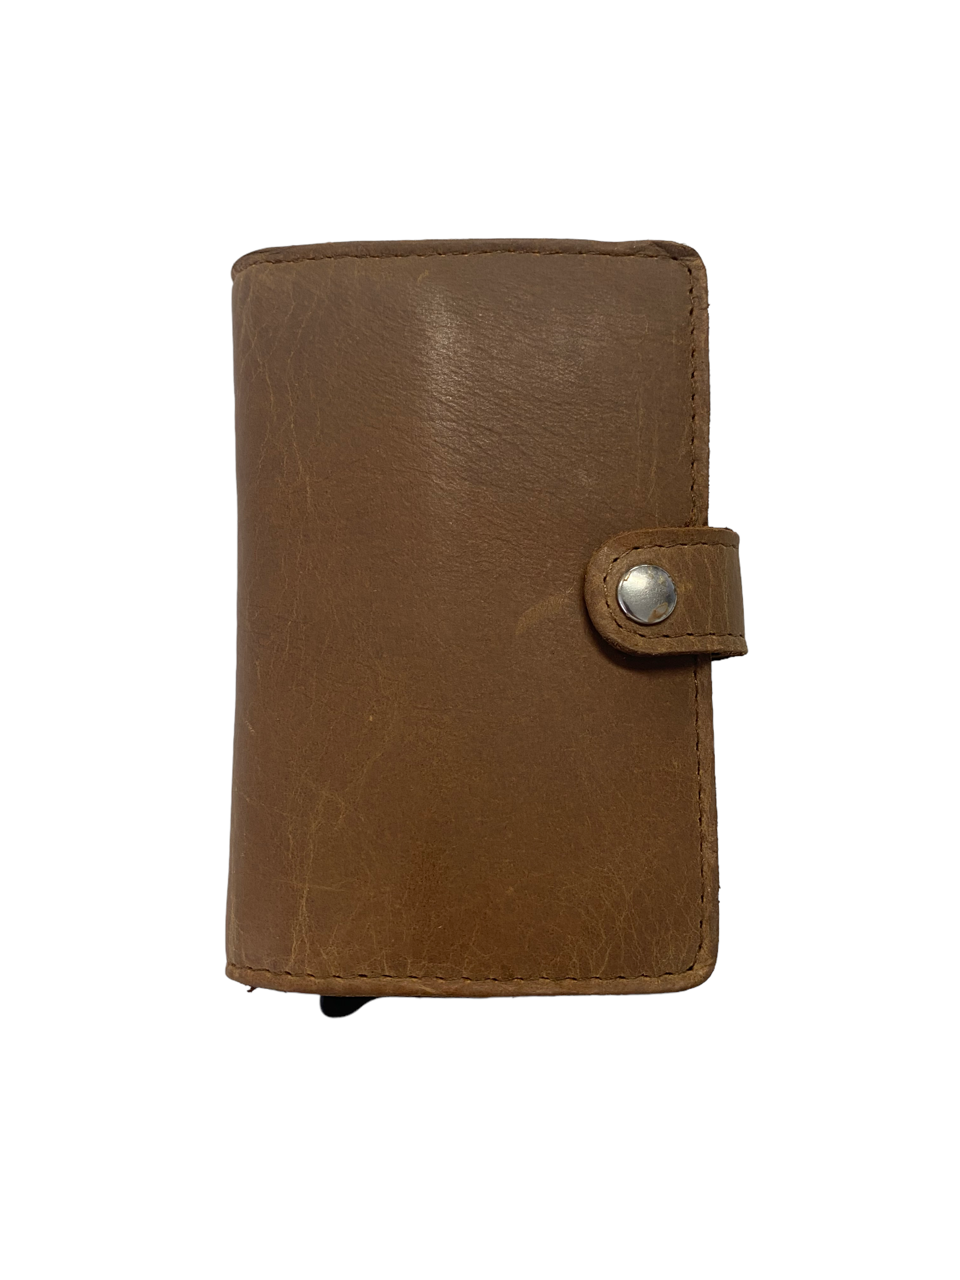 Oran - DL-02 Leather Spring load 8 card wallet - Brown-1